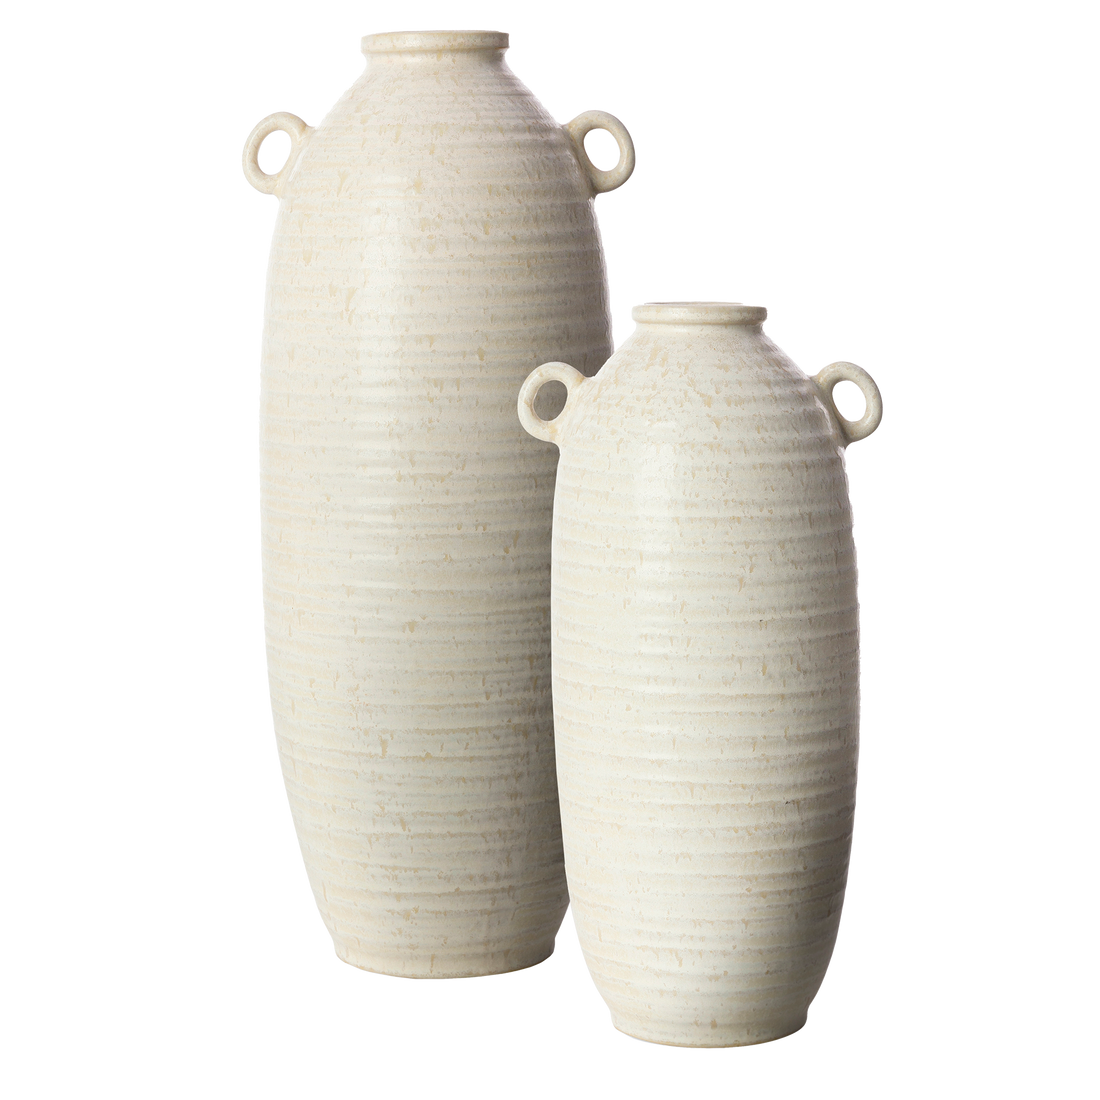 Kushan Ceramic Floor Vase Set